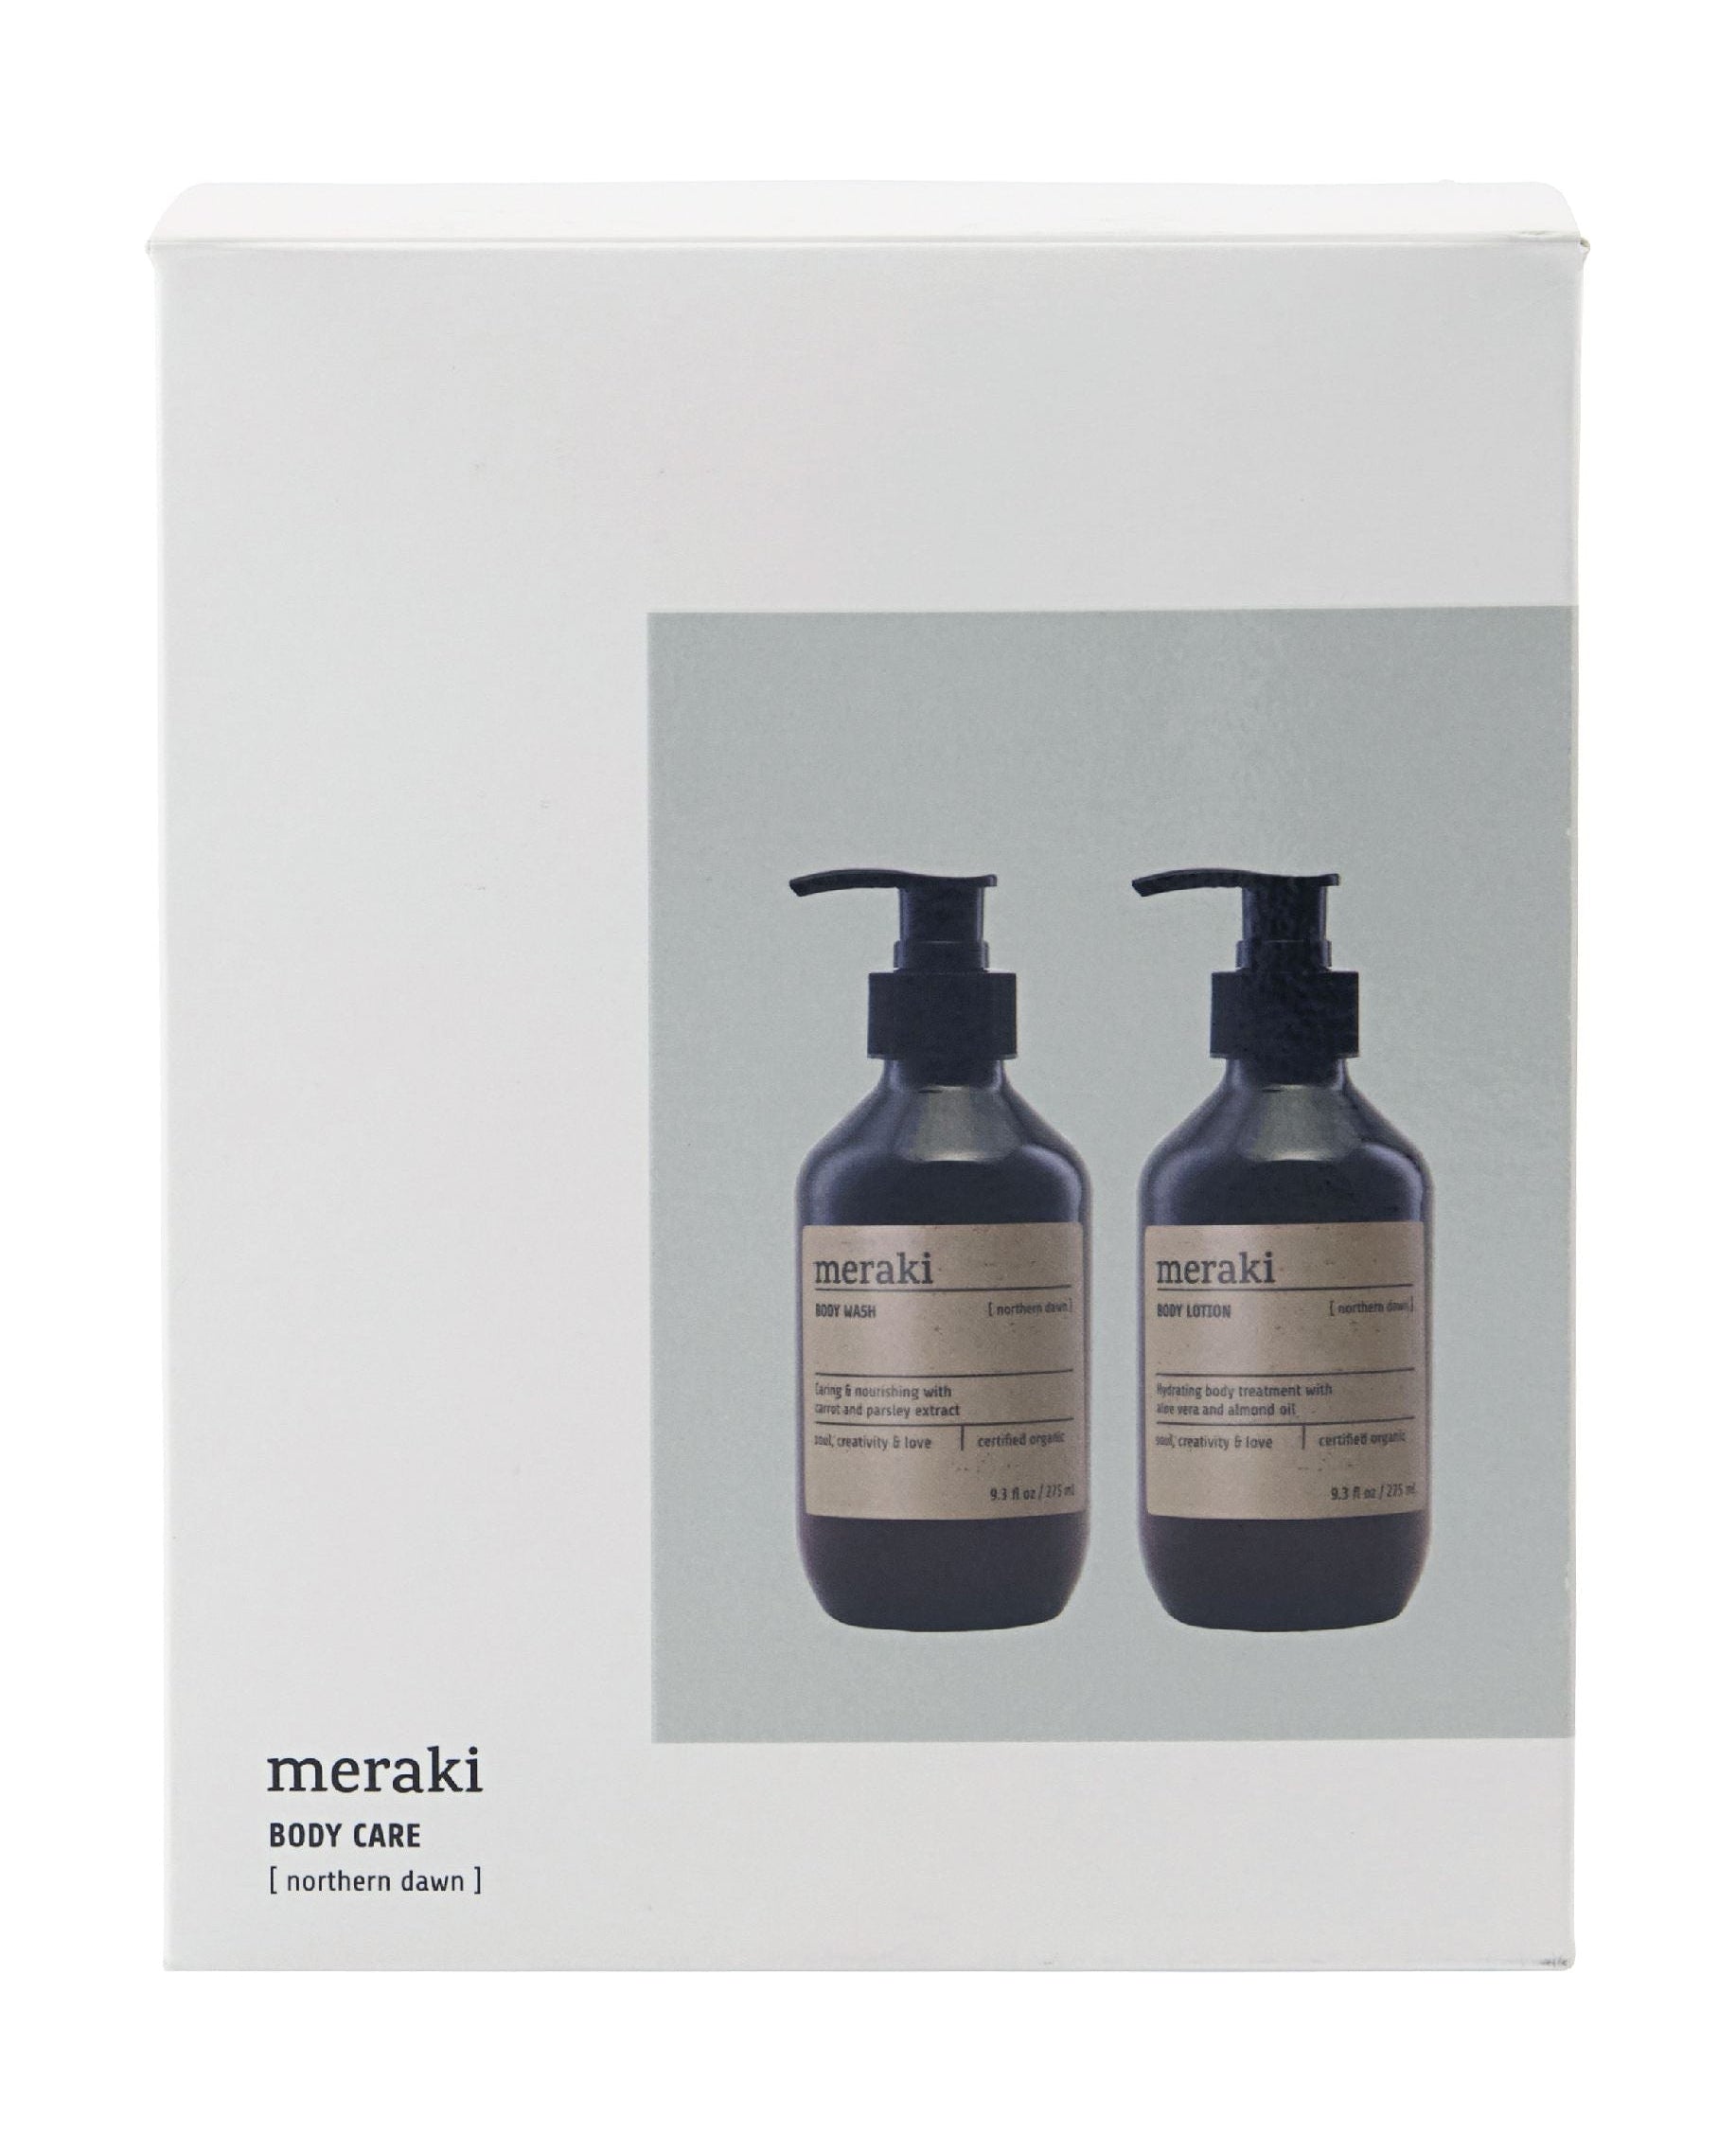 Meraki Body Care Regalo Box 275/275 ml, Northern Dawn